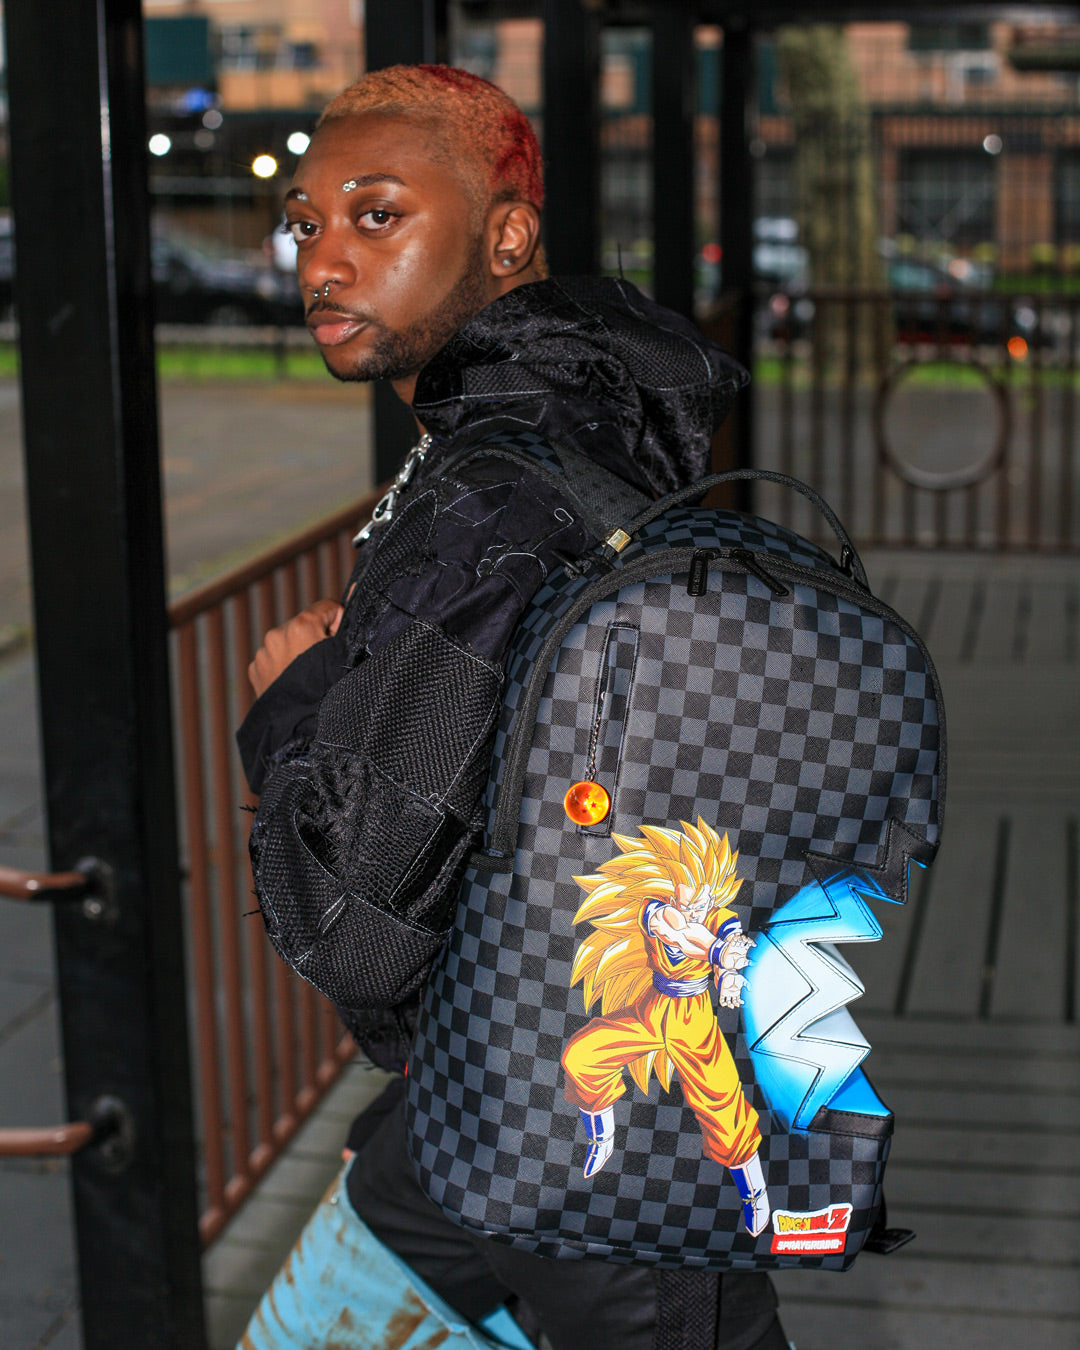 Dragon Ball Z Goku Backpack - Dragon Ball Z